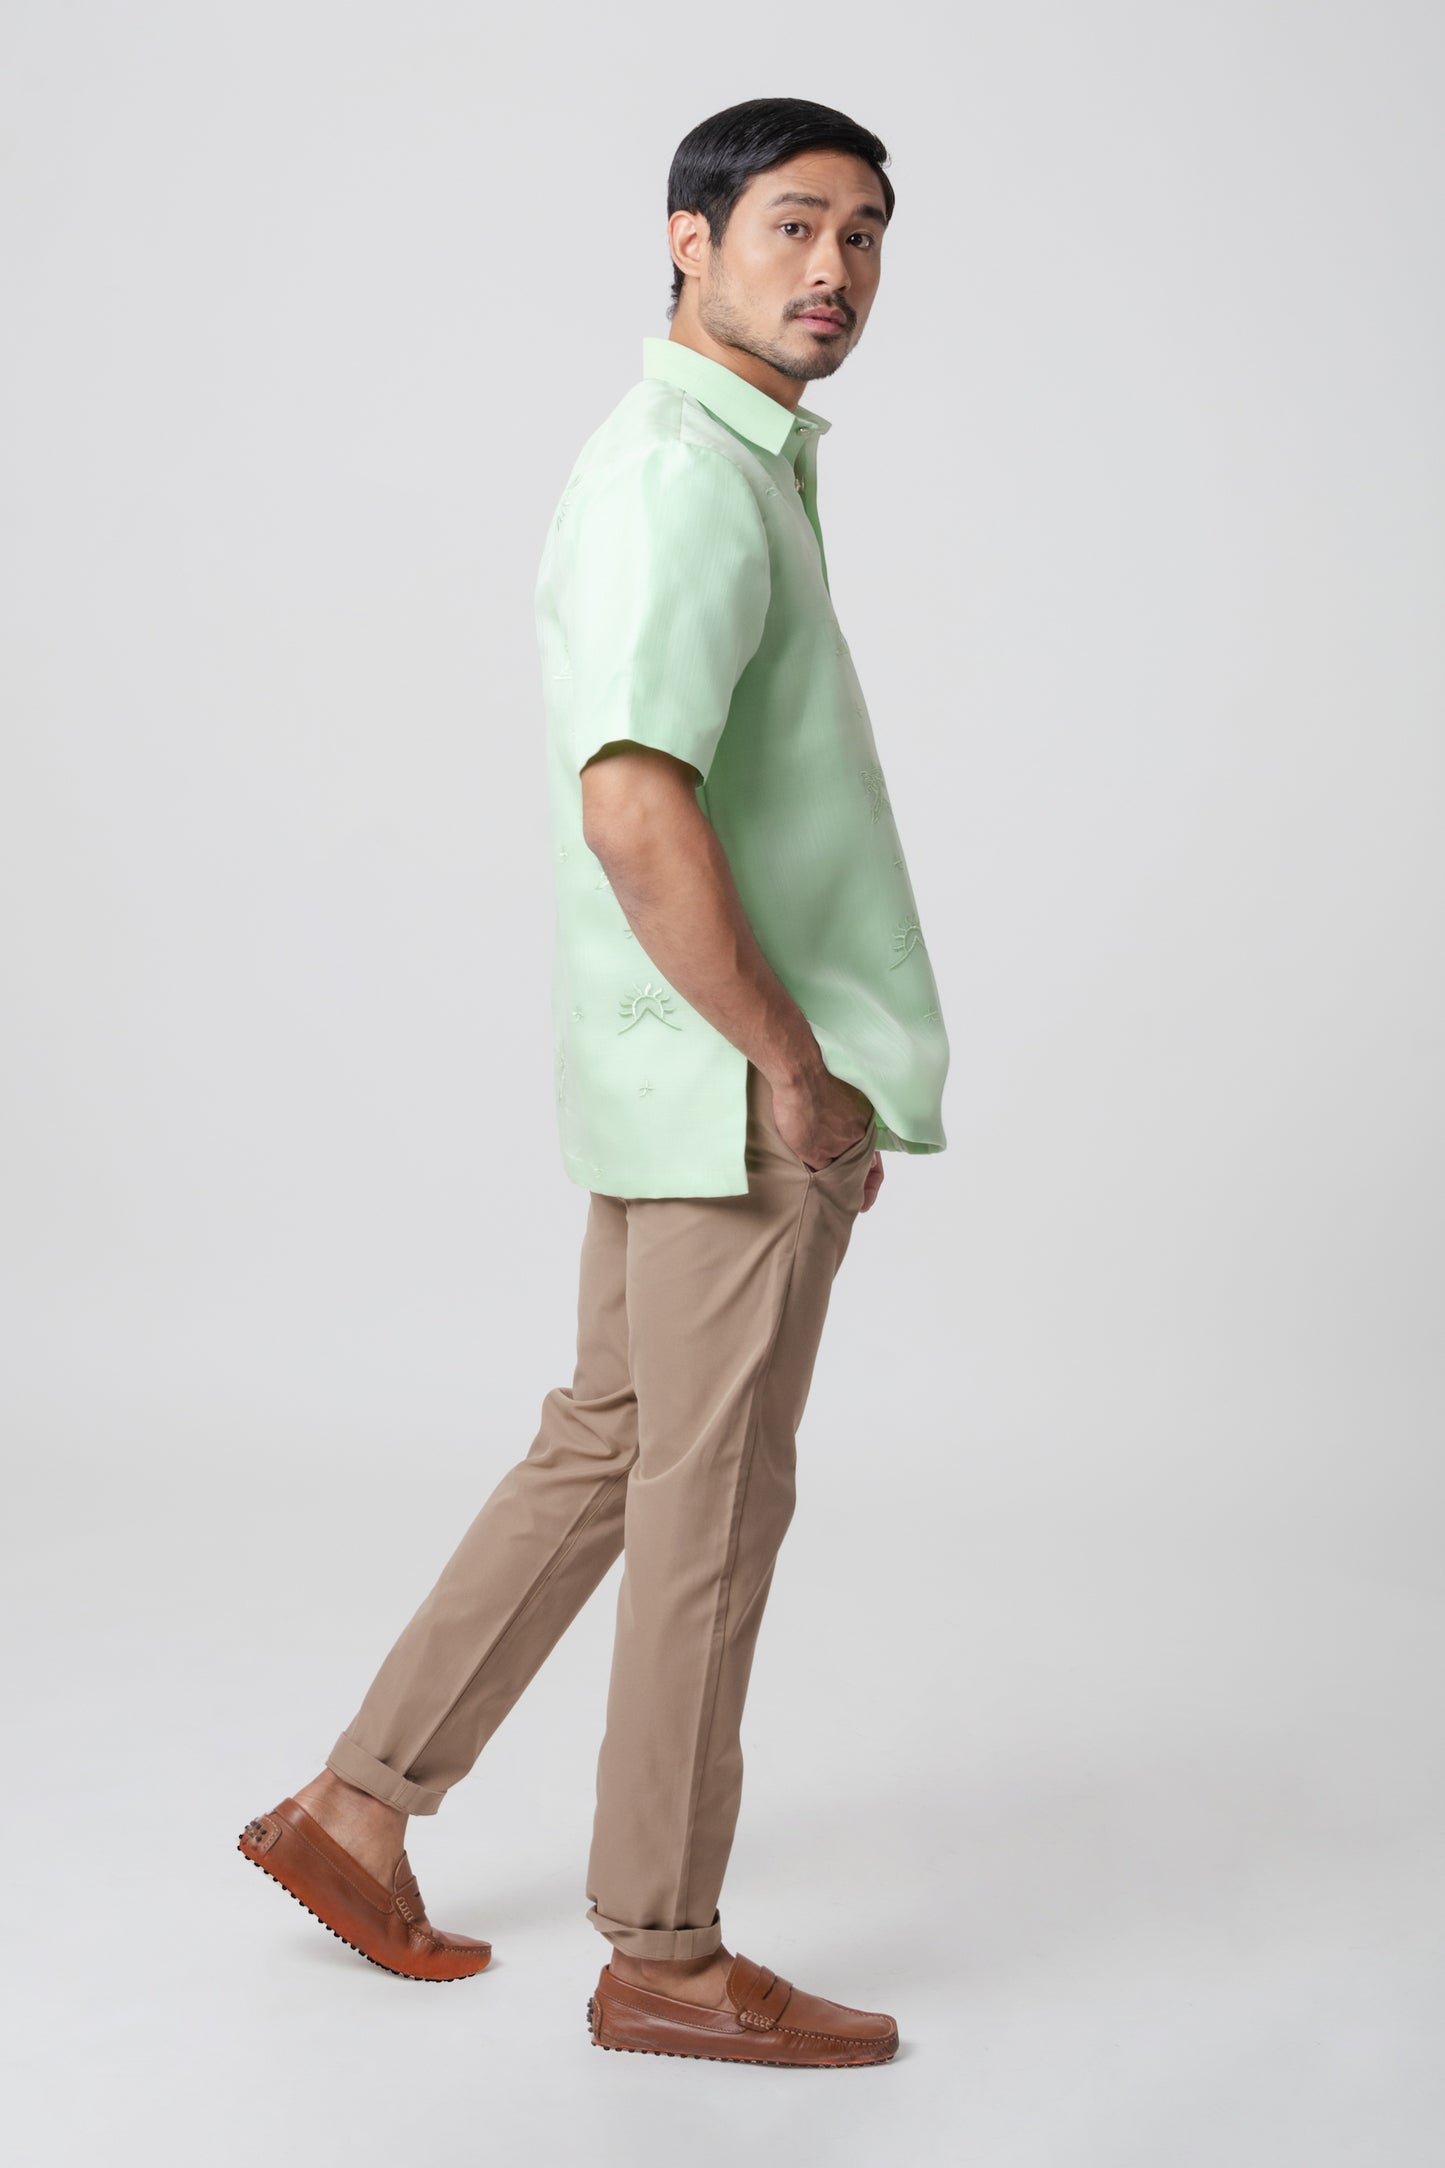 Danilo Men's Short Sleeve Barong (Green Apple)